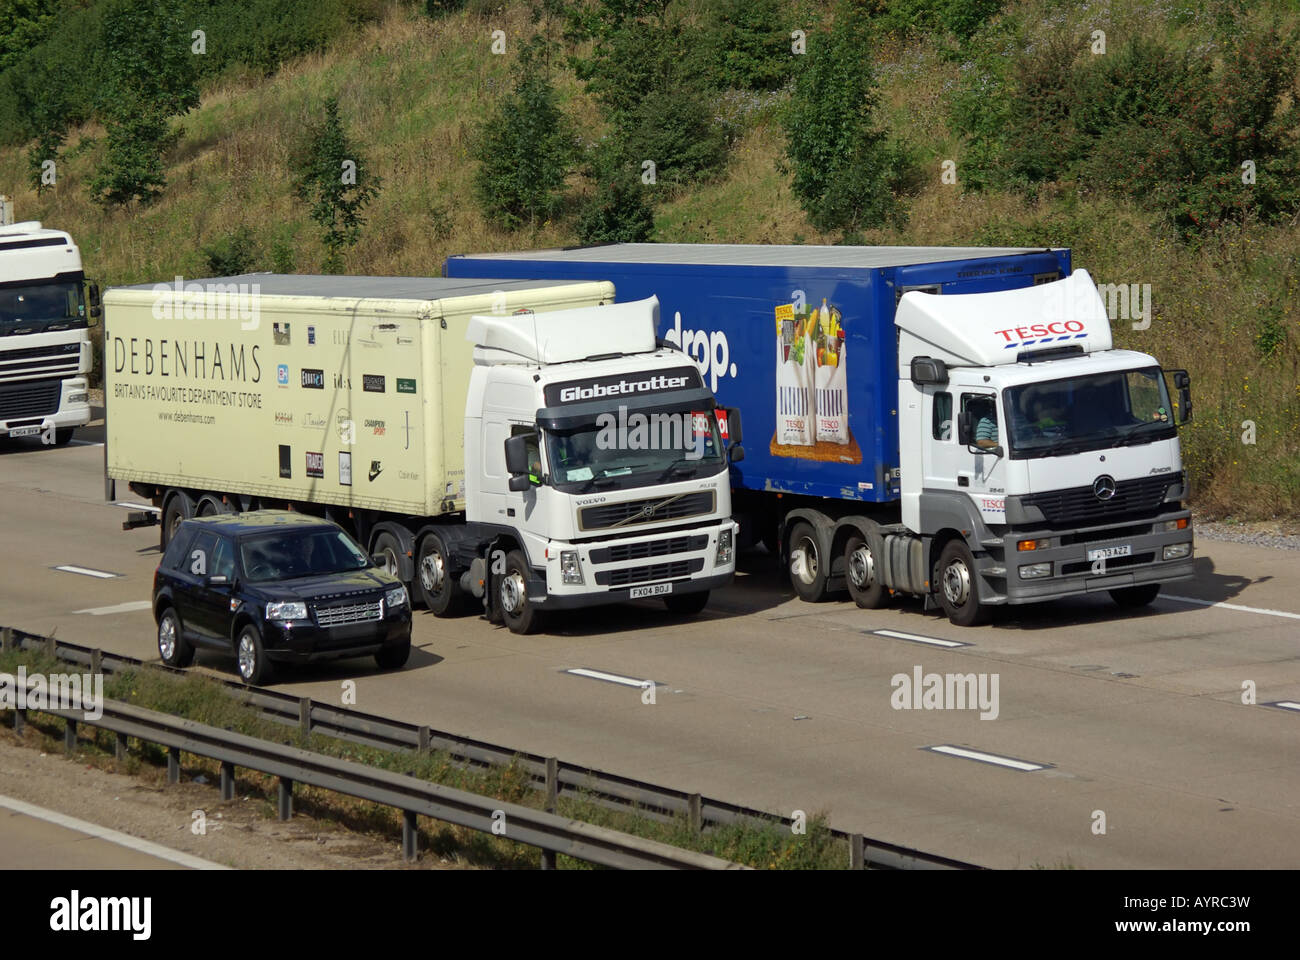 Debenhams and Tesco lorry with Range Rover car overtaking on M25 motorway Stock Photo